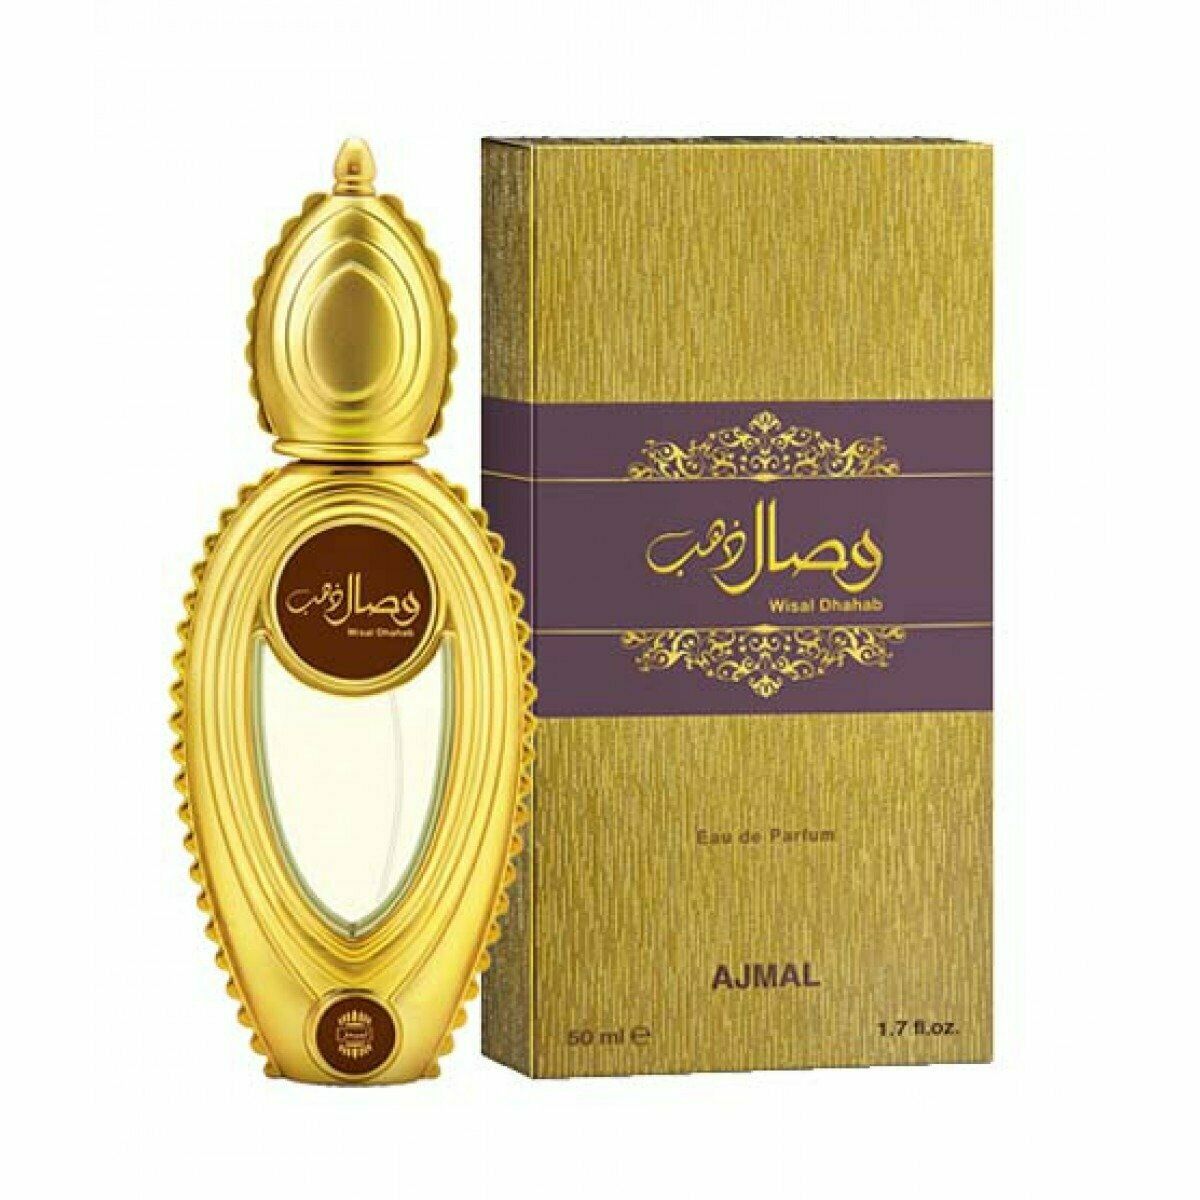 Wisal Dhahab Gold (50ml)Eau De Perfum spray by Ajmal